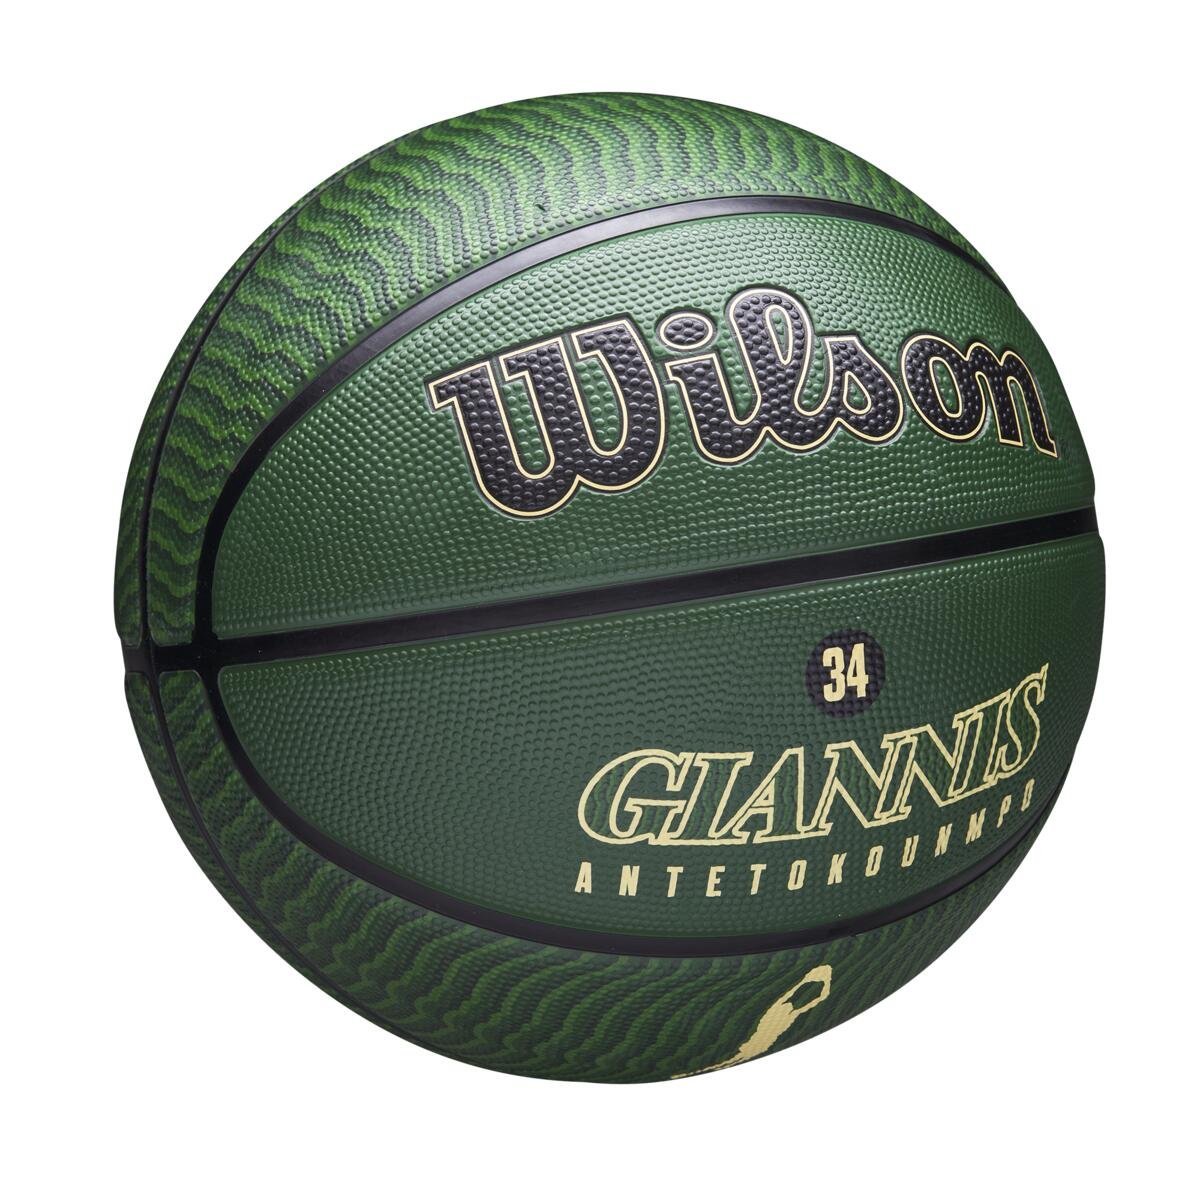 Lopta Wilson NBA Player Icon Outdoor Bskt Giannis - zelená/béžová